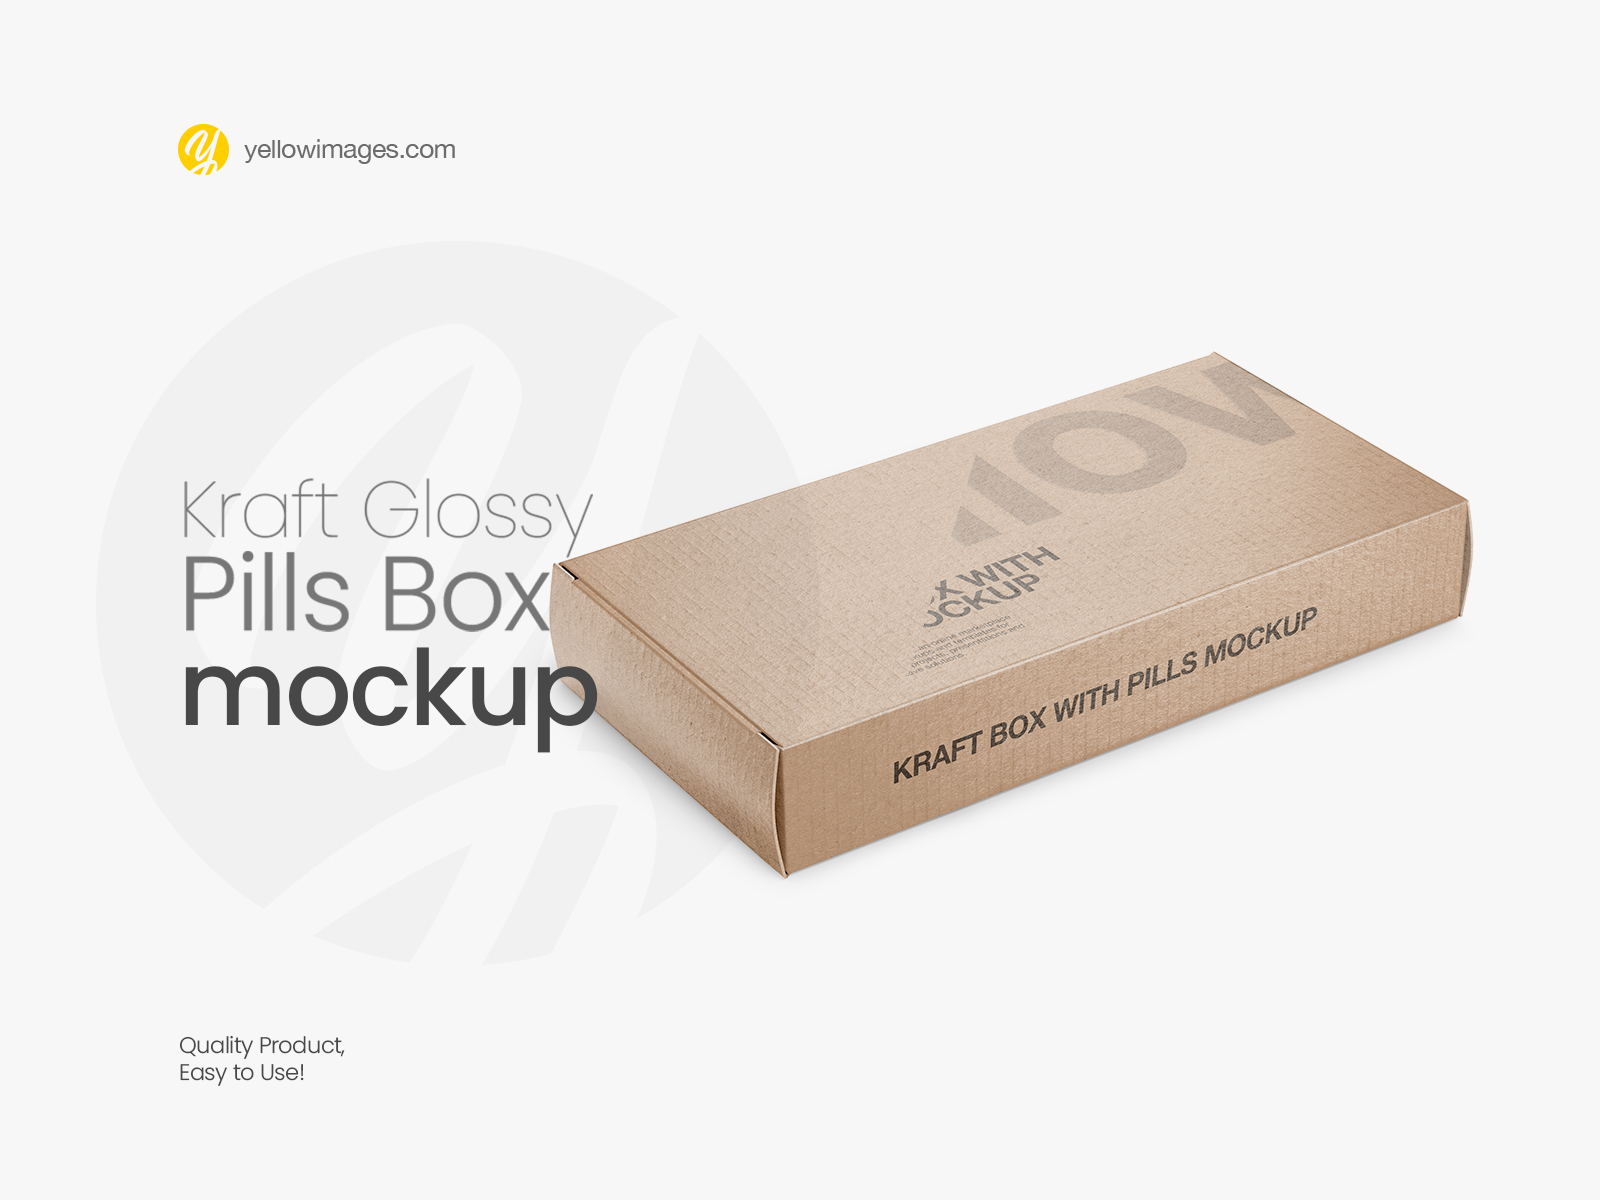 Download Kraft Glossy Pills Box Mockup - Halfside View by Dmytro Ovcharenko on Dribbble